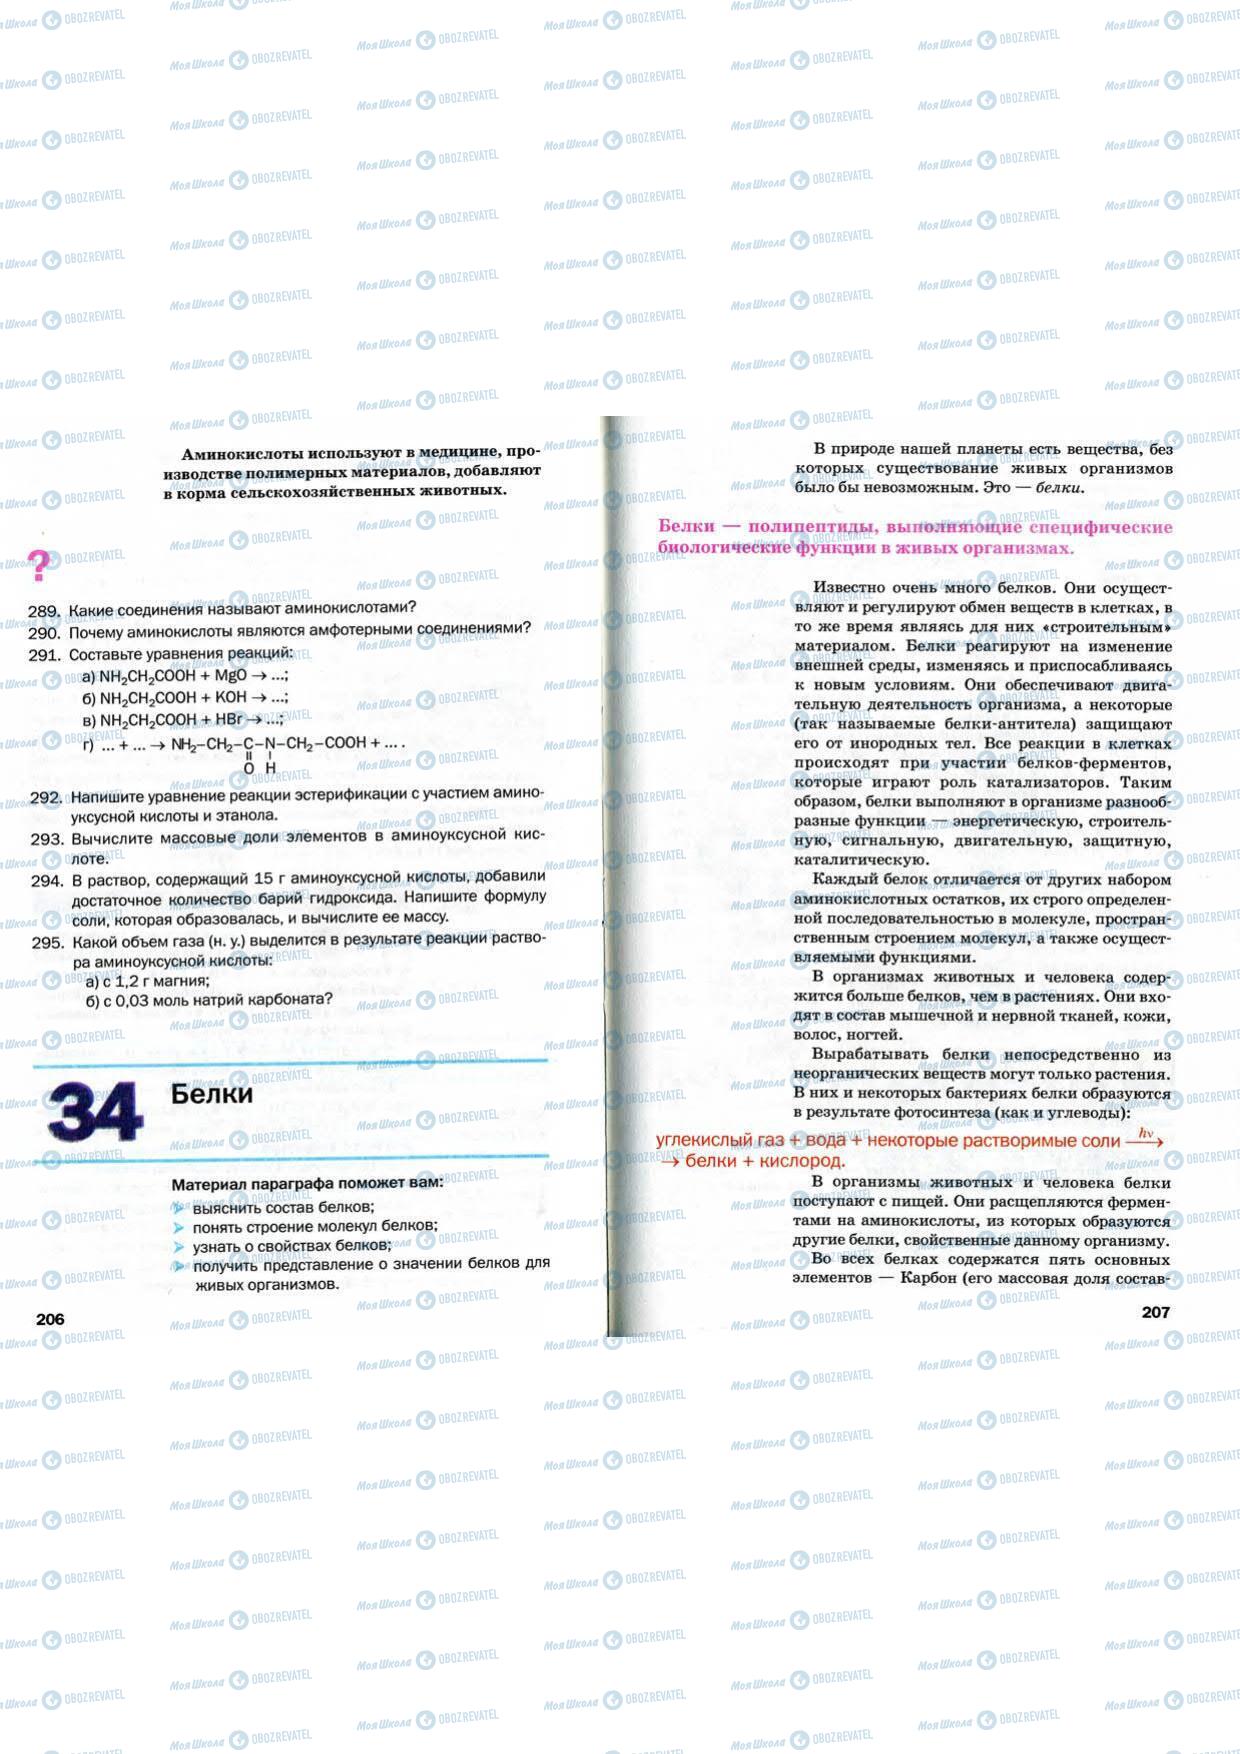 Учебники Химия 9 класс страница 206-207